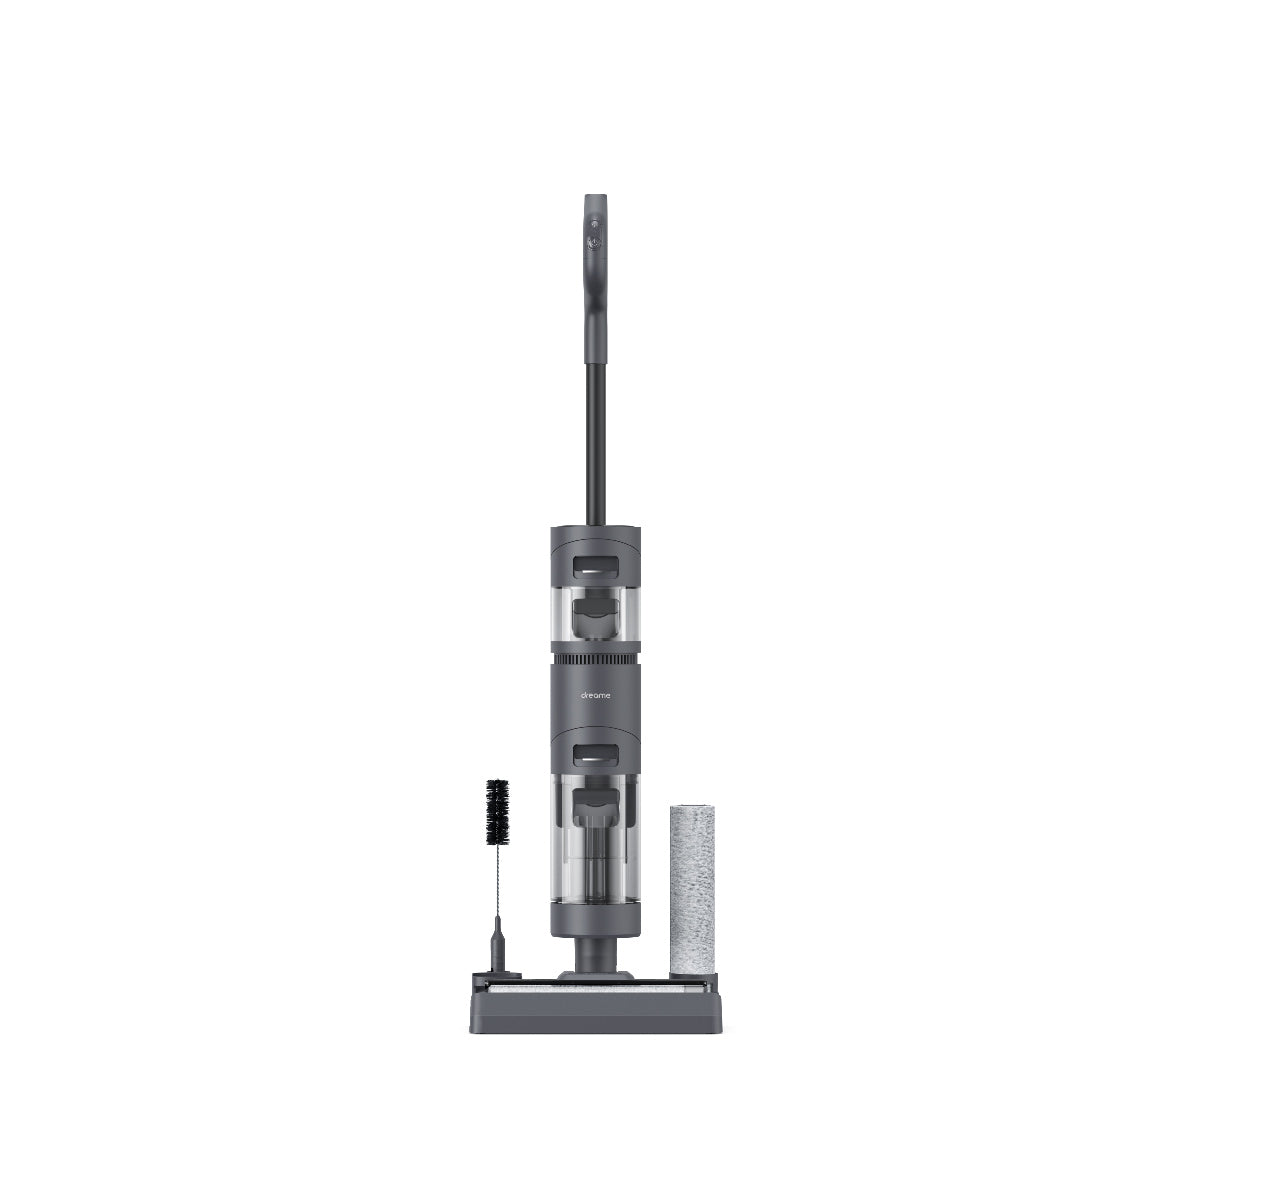 Dreame H12 PRO Wet Dry Vacuum Cleaner, Smart Floor Cleaner